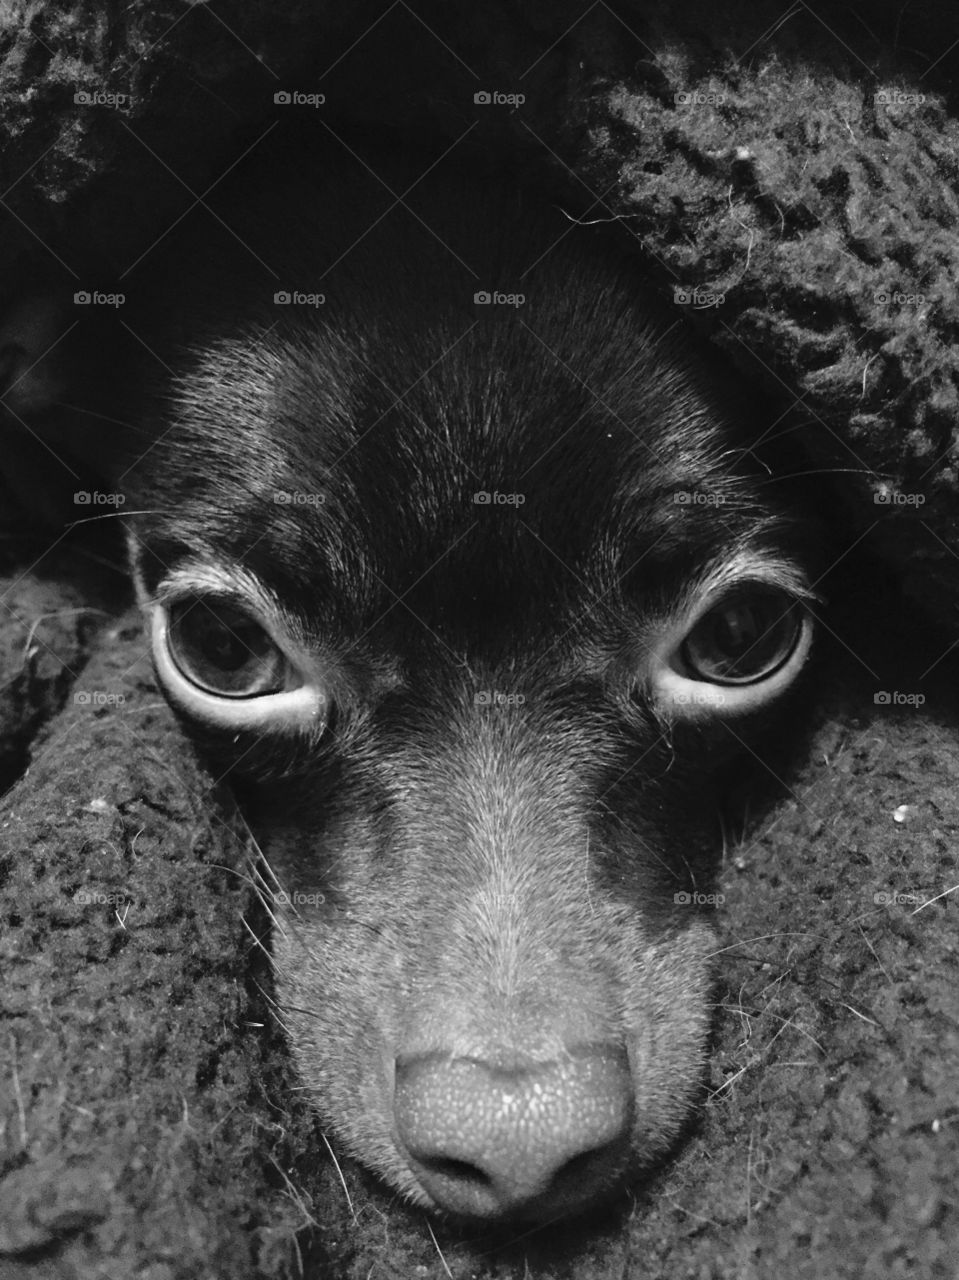 Puppy eyes . Puppy under a blanket with sad eyes 